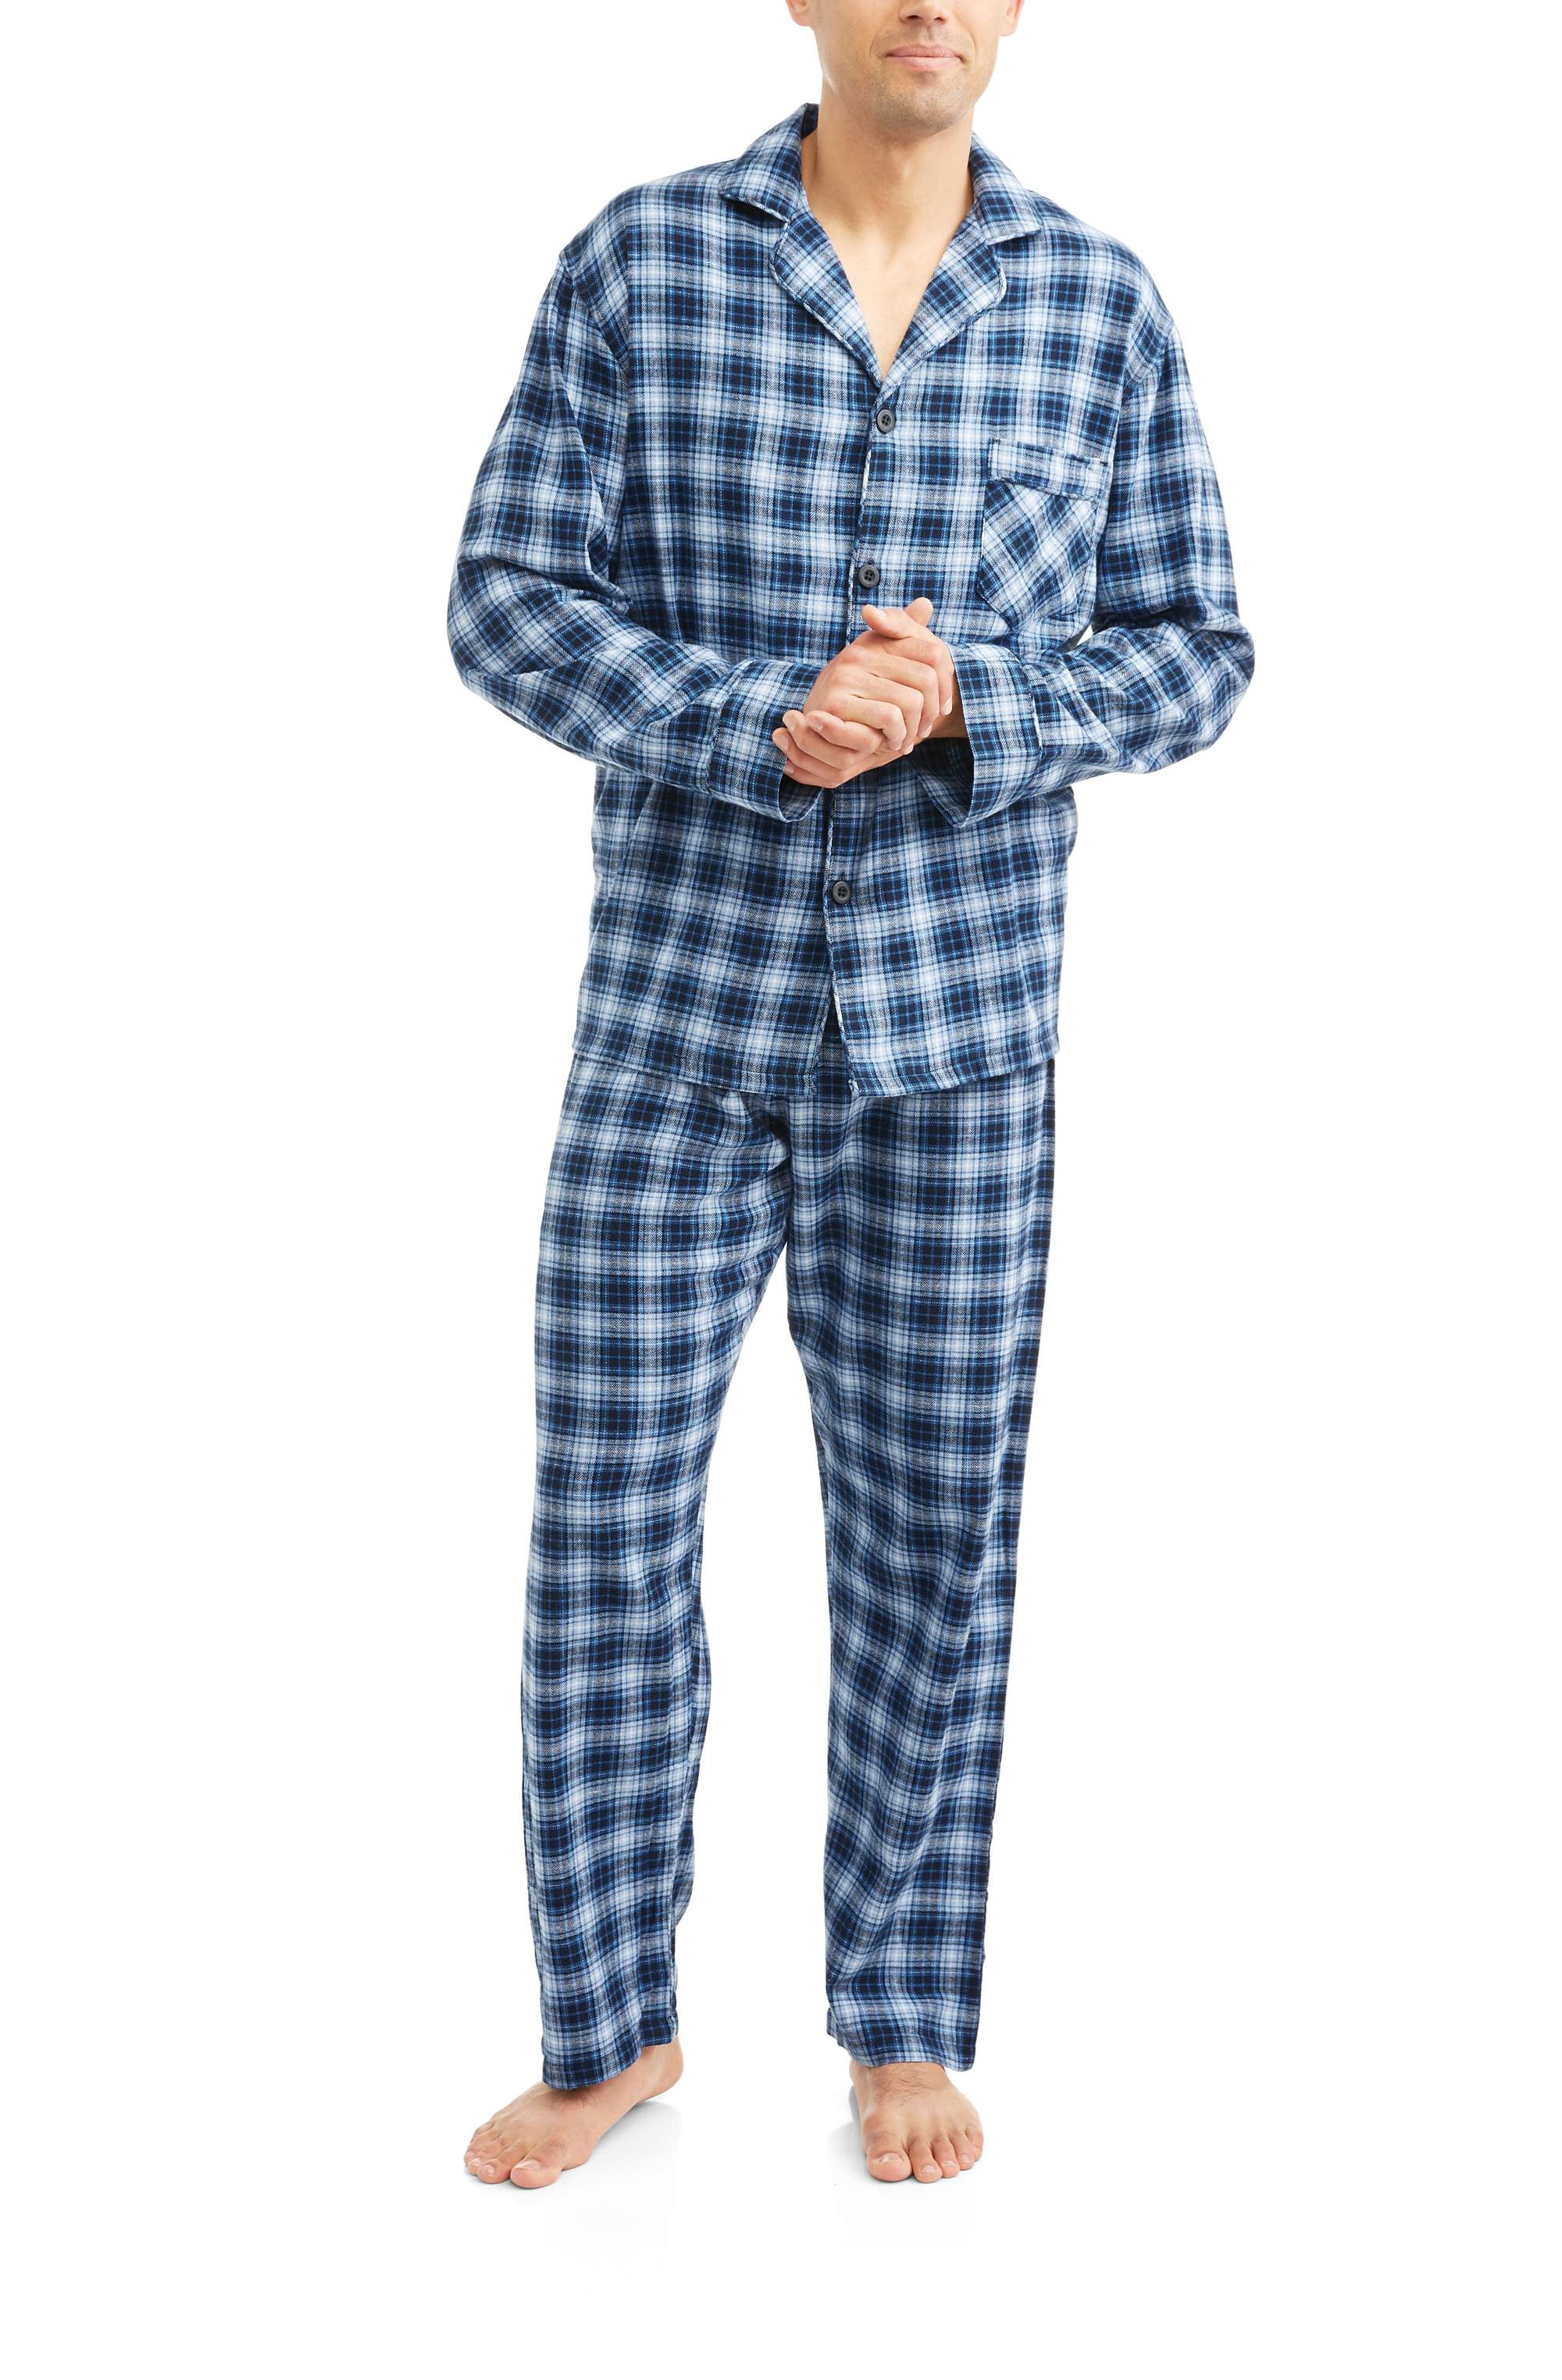 mens brushed cotton pyjamas pajama nightwear medium large xl xxl 